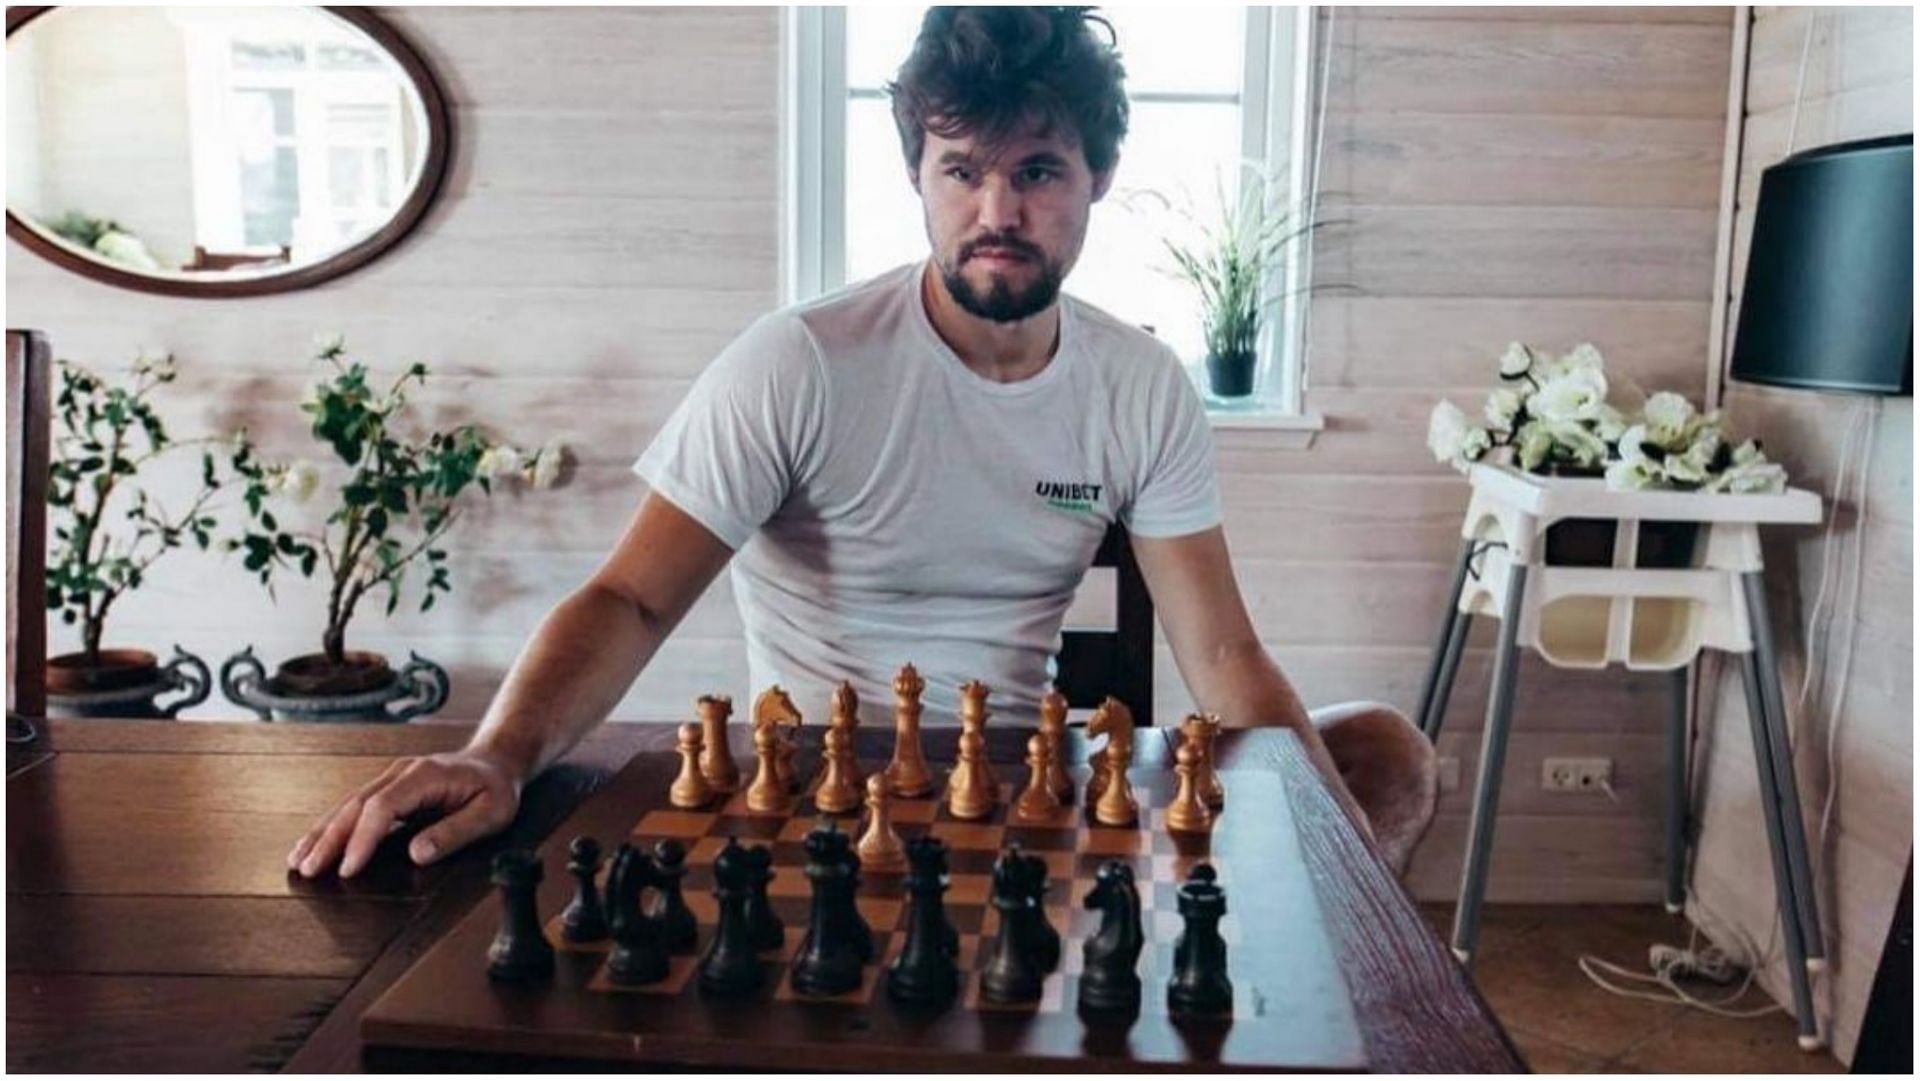 Magnus vs Alexandra part 5 #magnuscarlsen #carlsen #chess